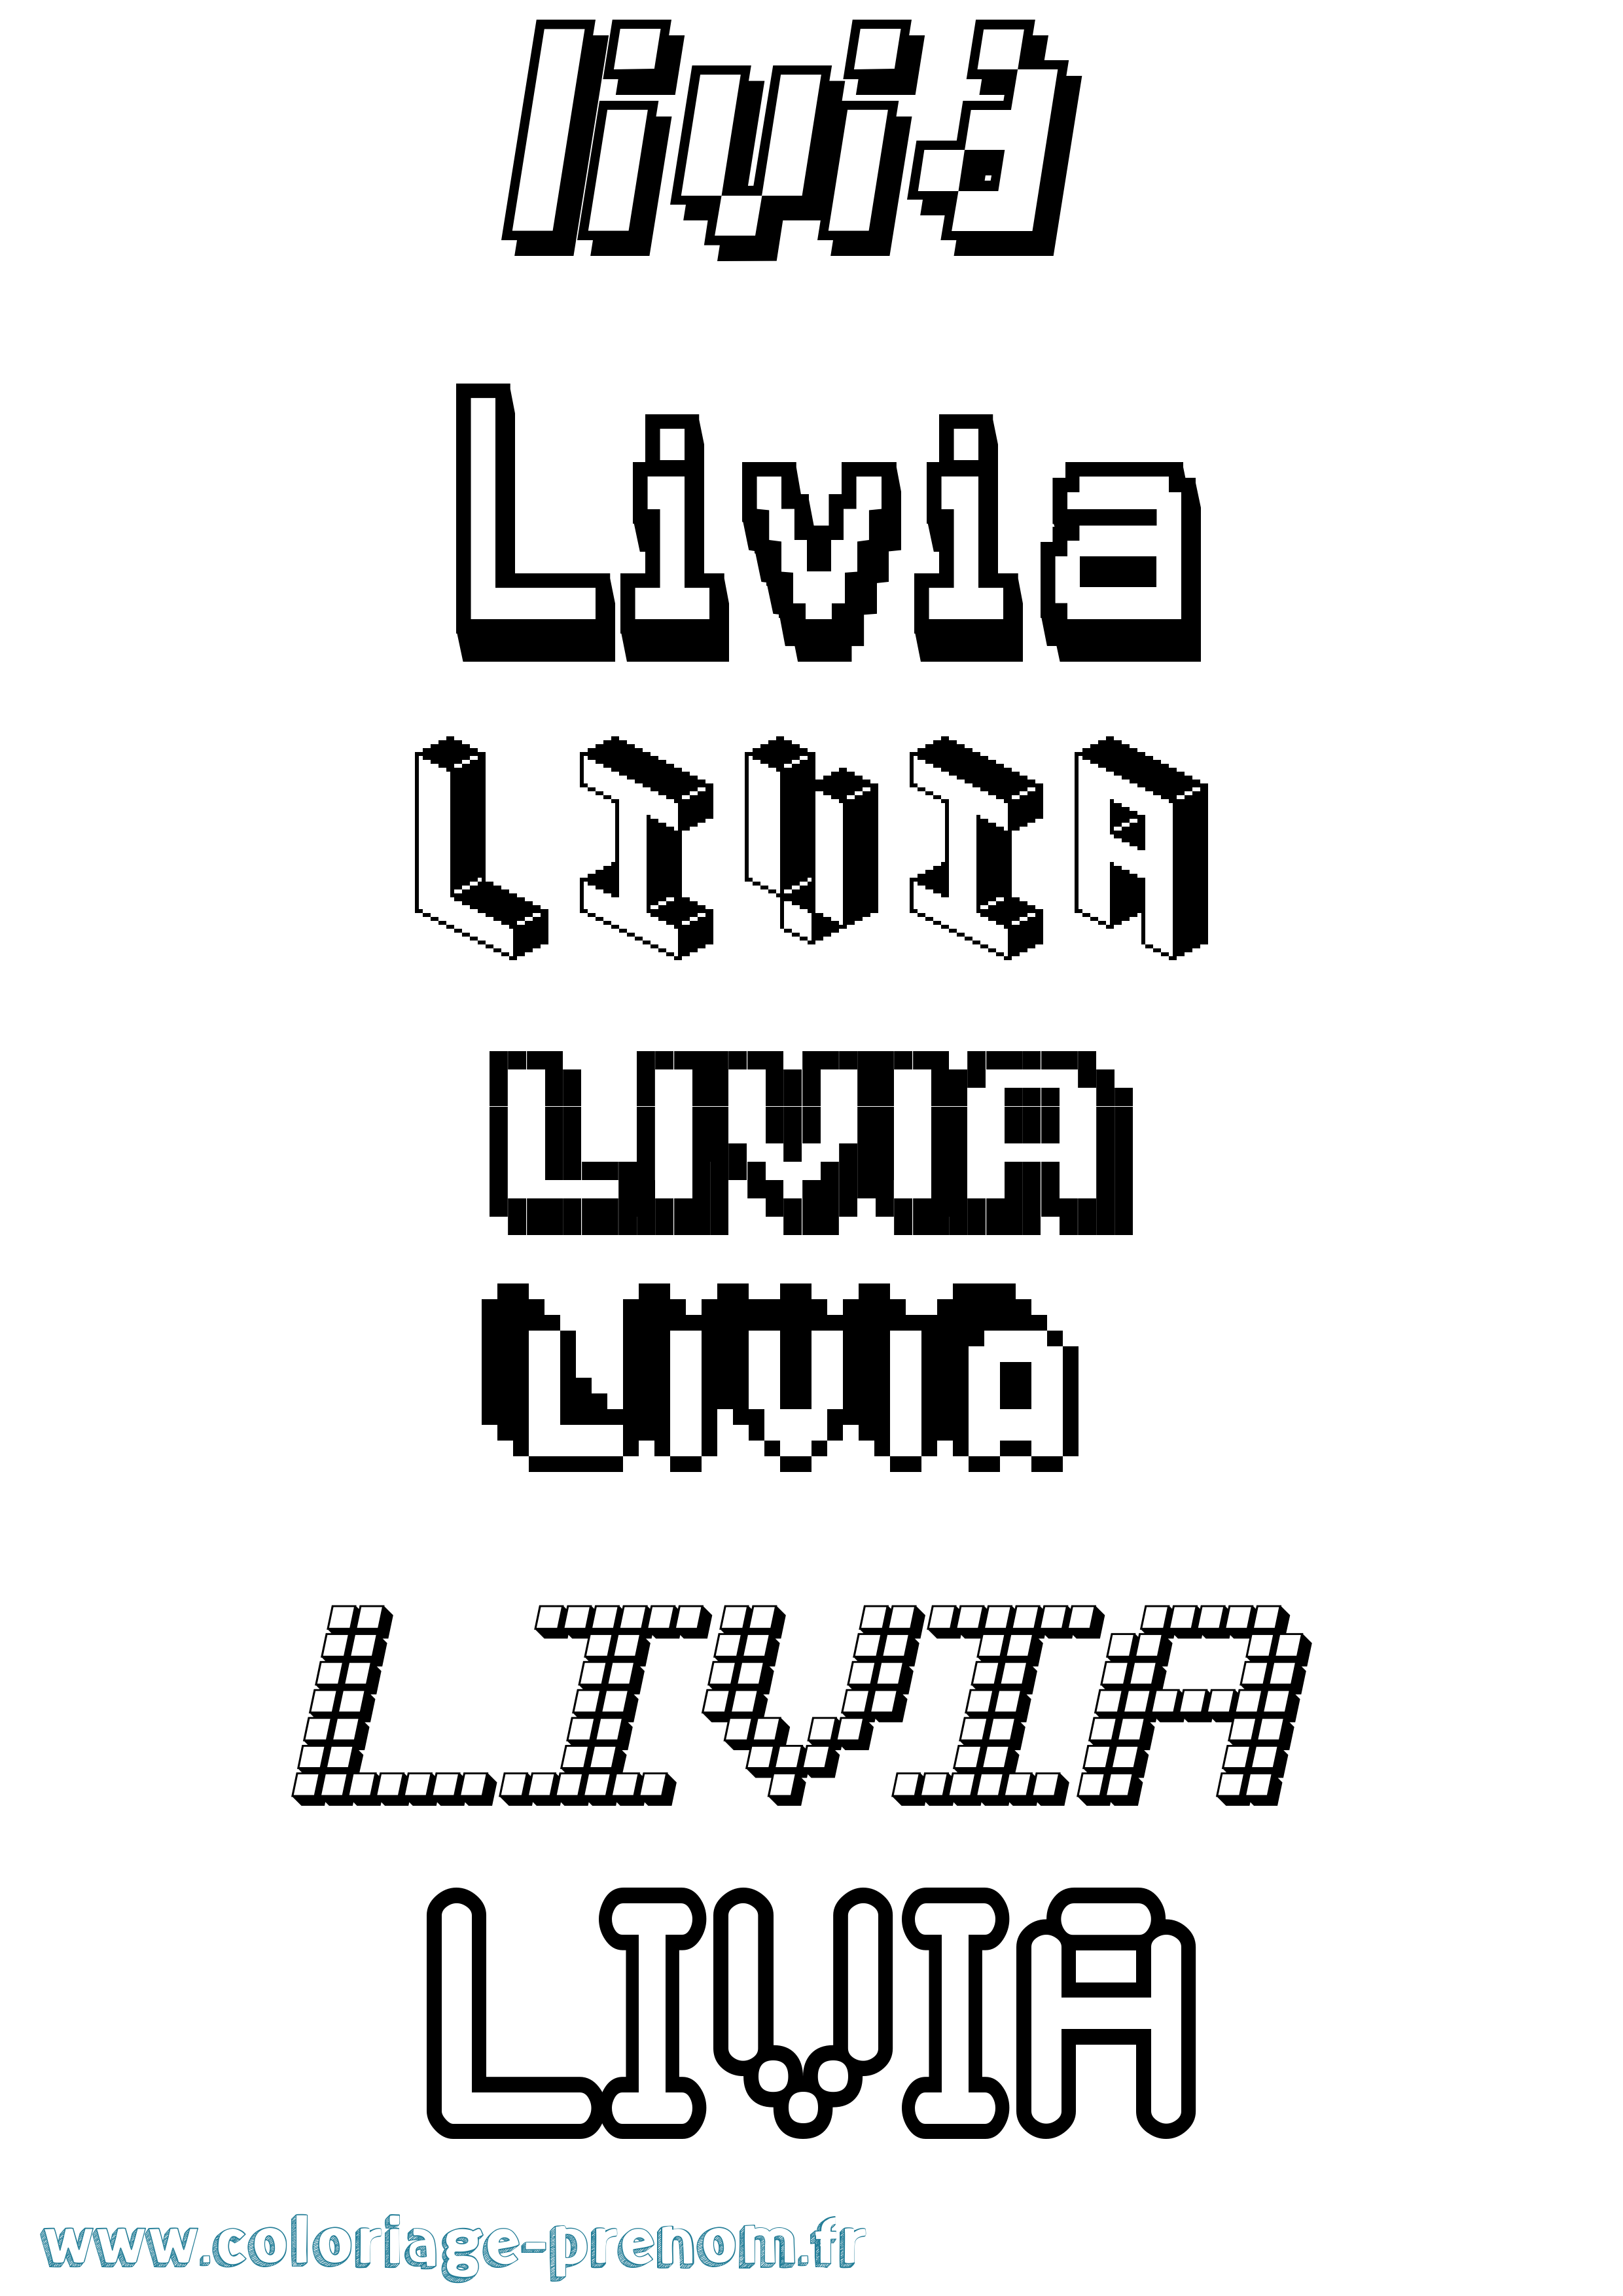 Coloriage prénom Livia Pixel